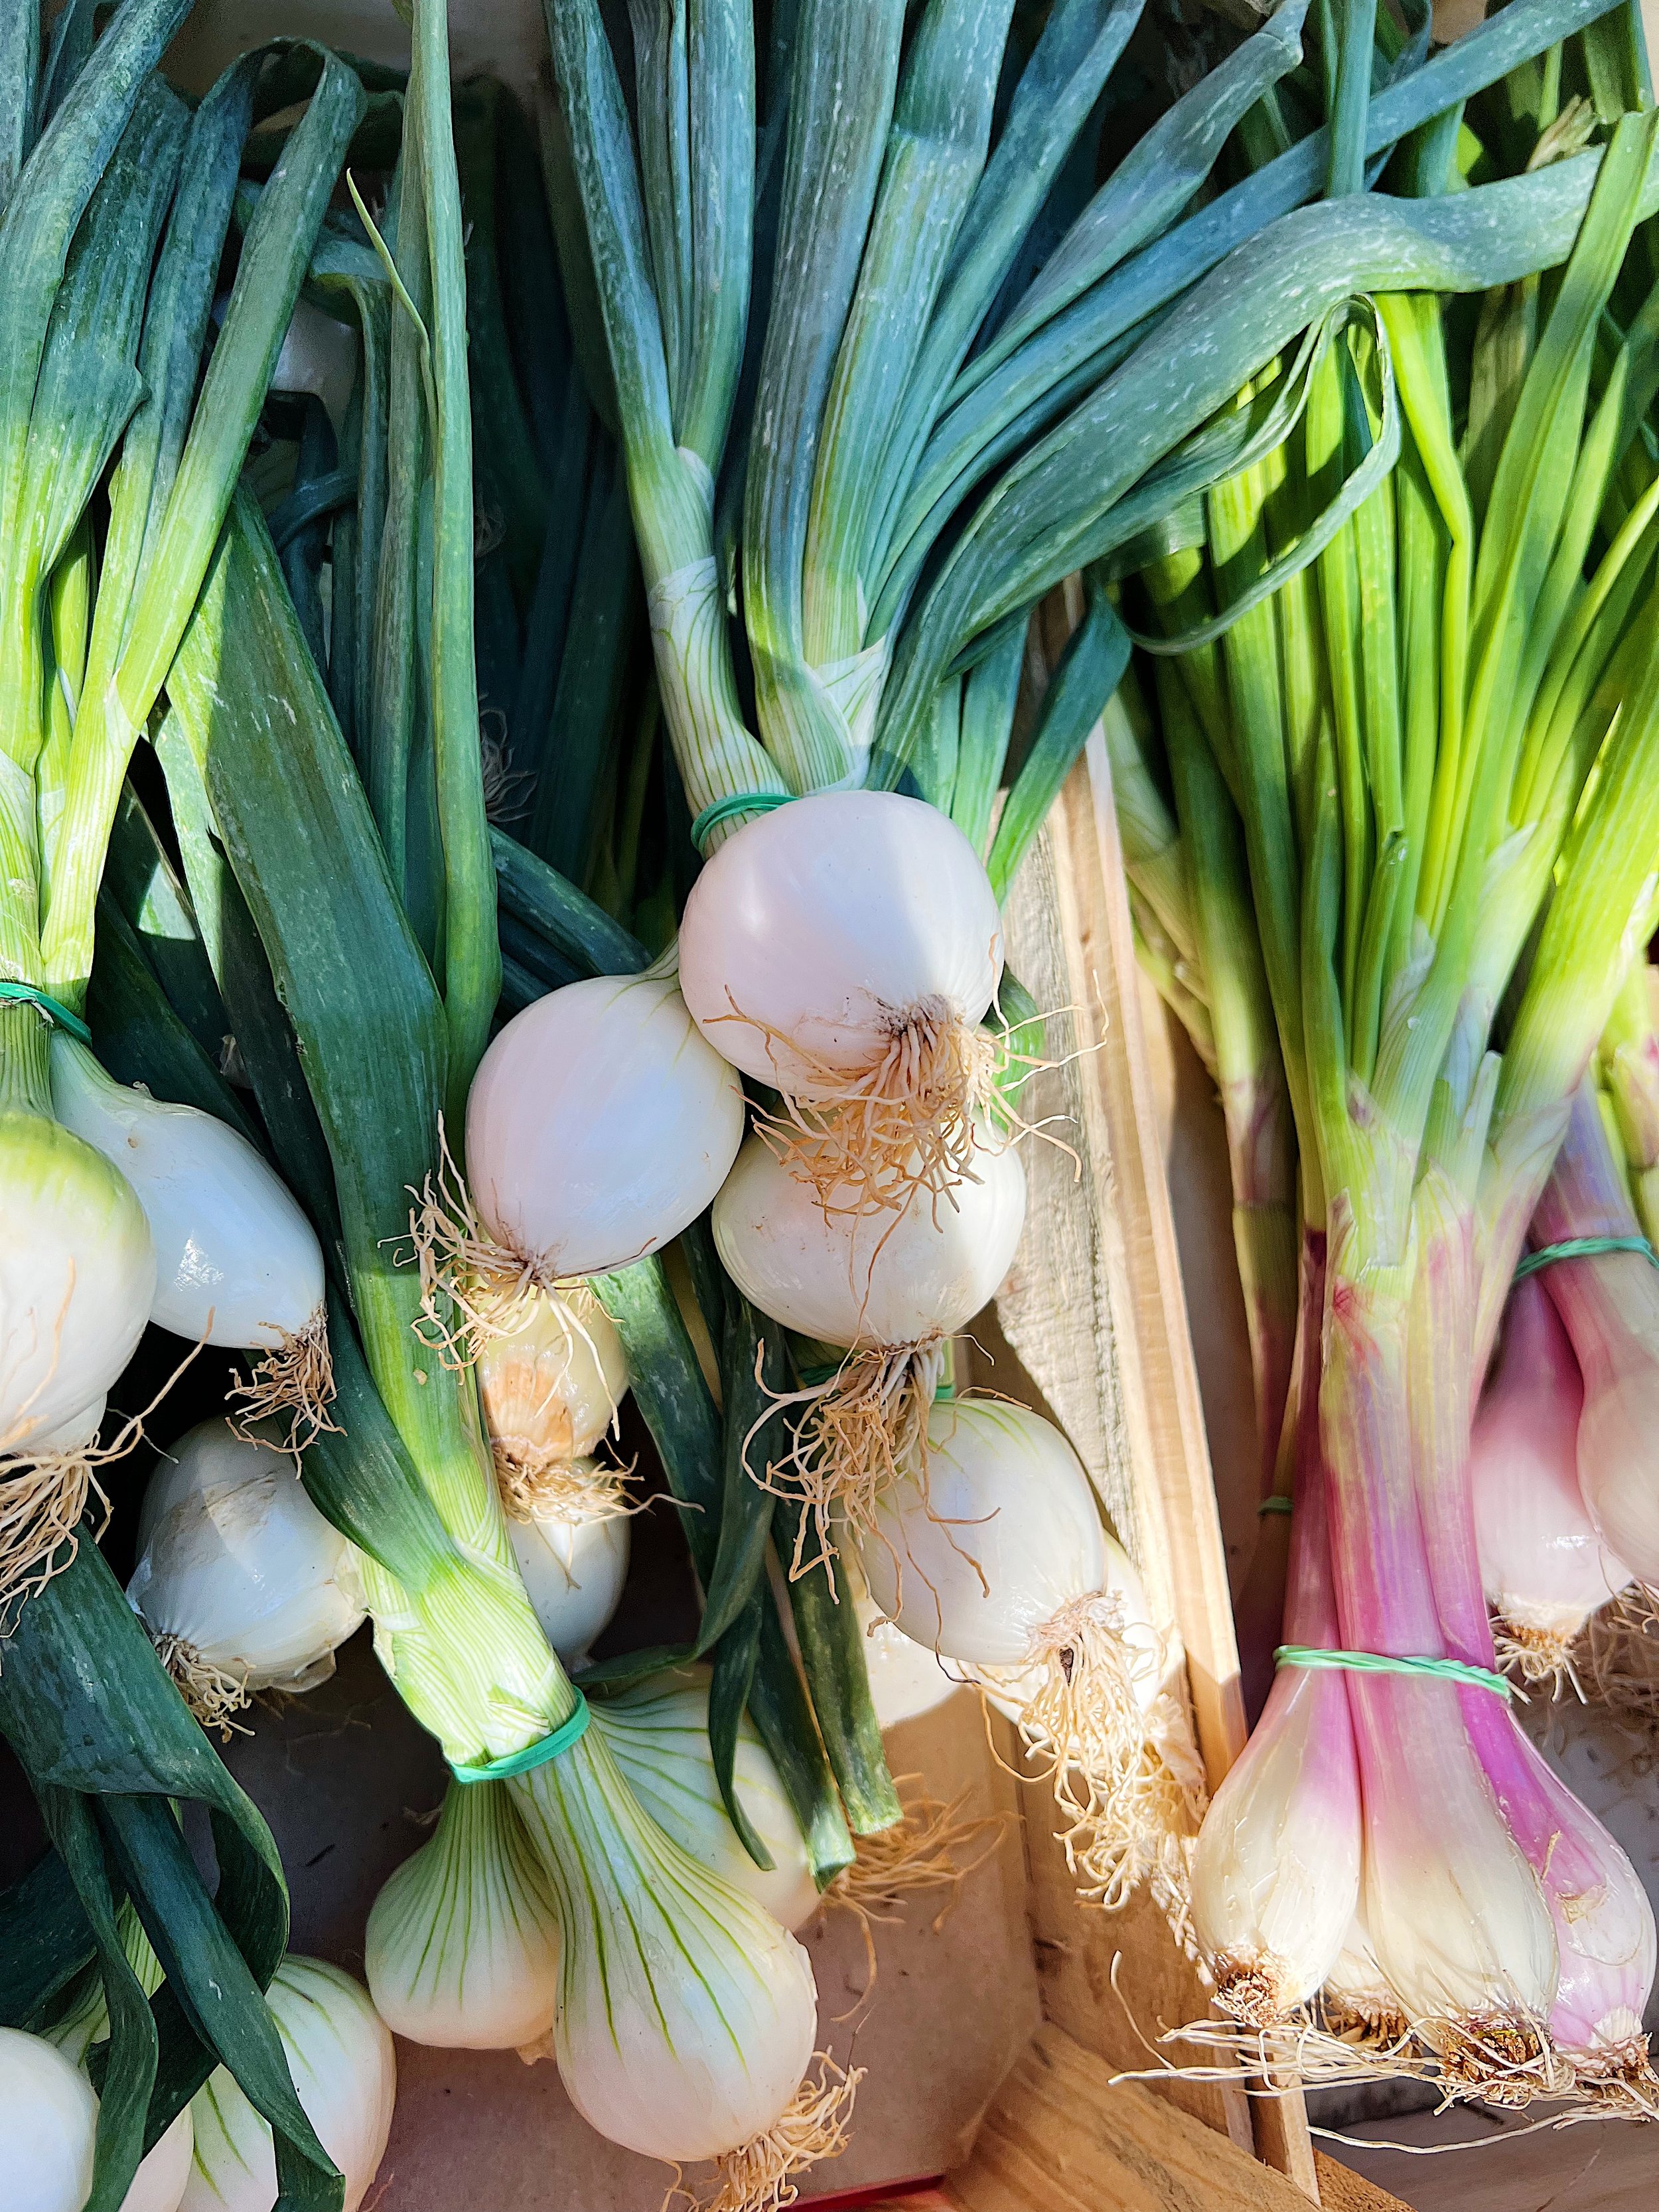 Green Onions, Arles Market